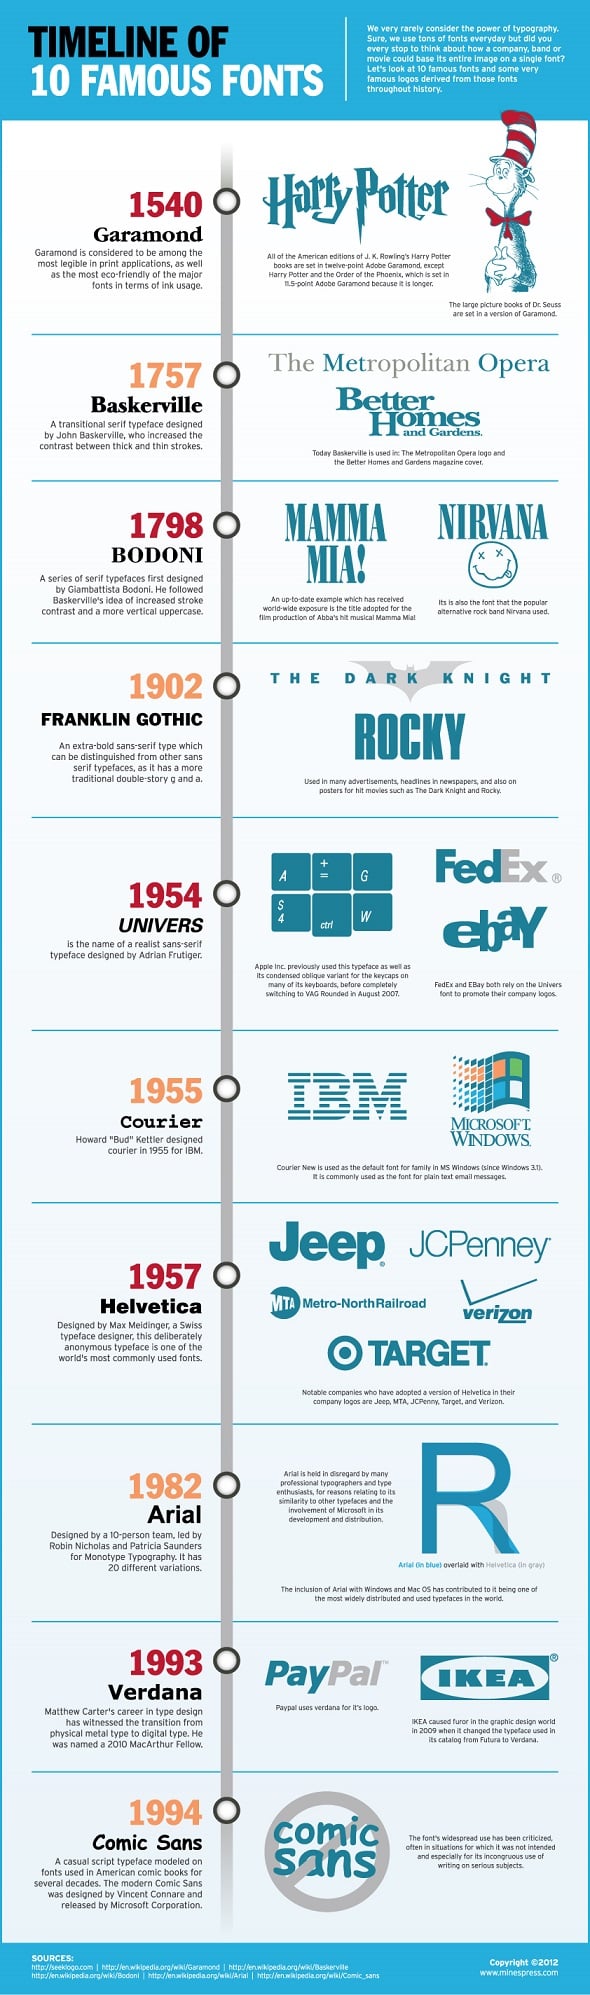 Timeline of 10 Famous Fonts